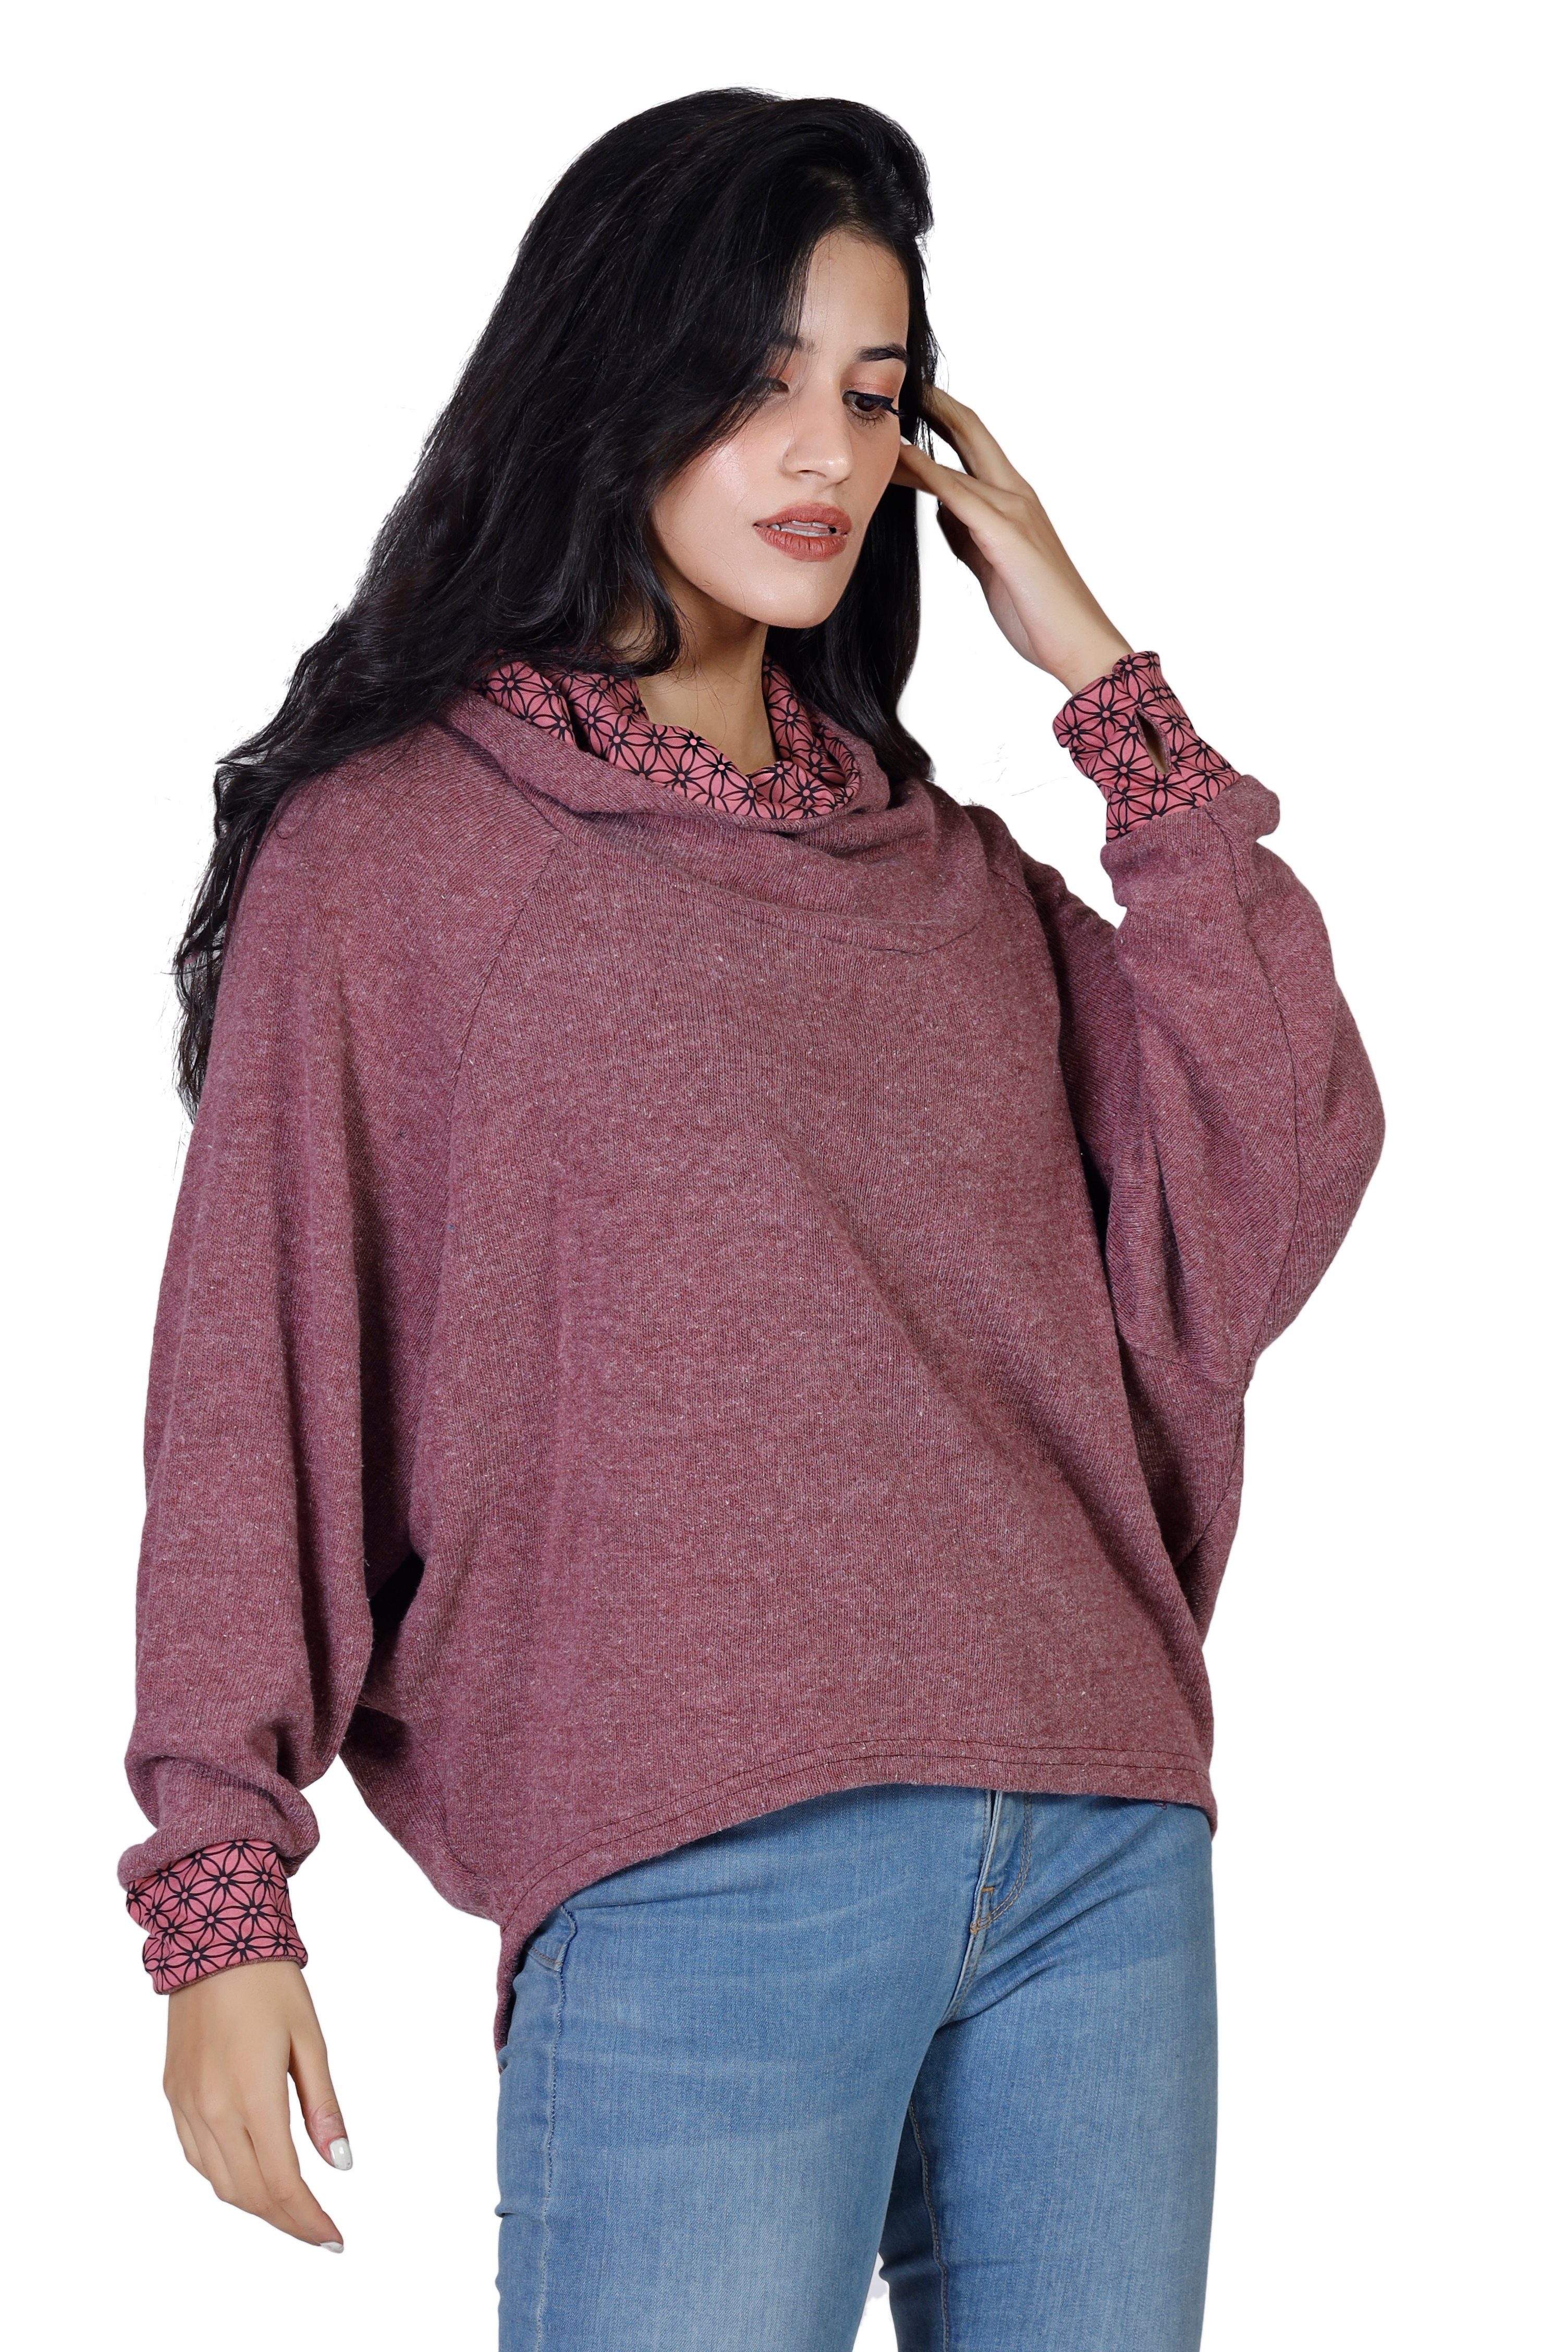 Guru-Shop Longsleeve Hoody, altrosa -.. Kapuzenpullover Bekleidung Pullover, alternative Sweatshirt